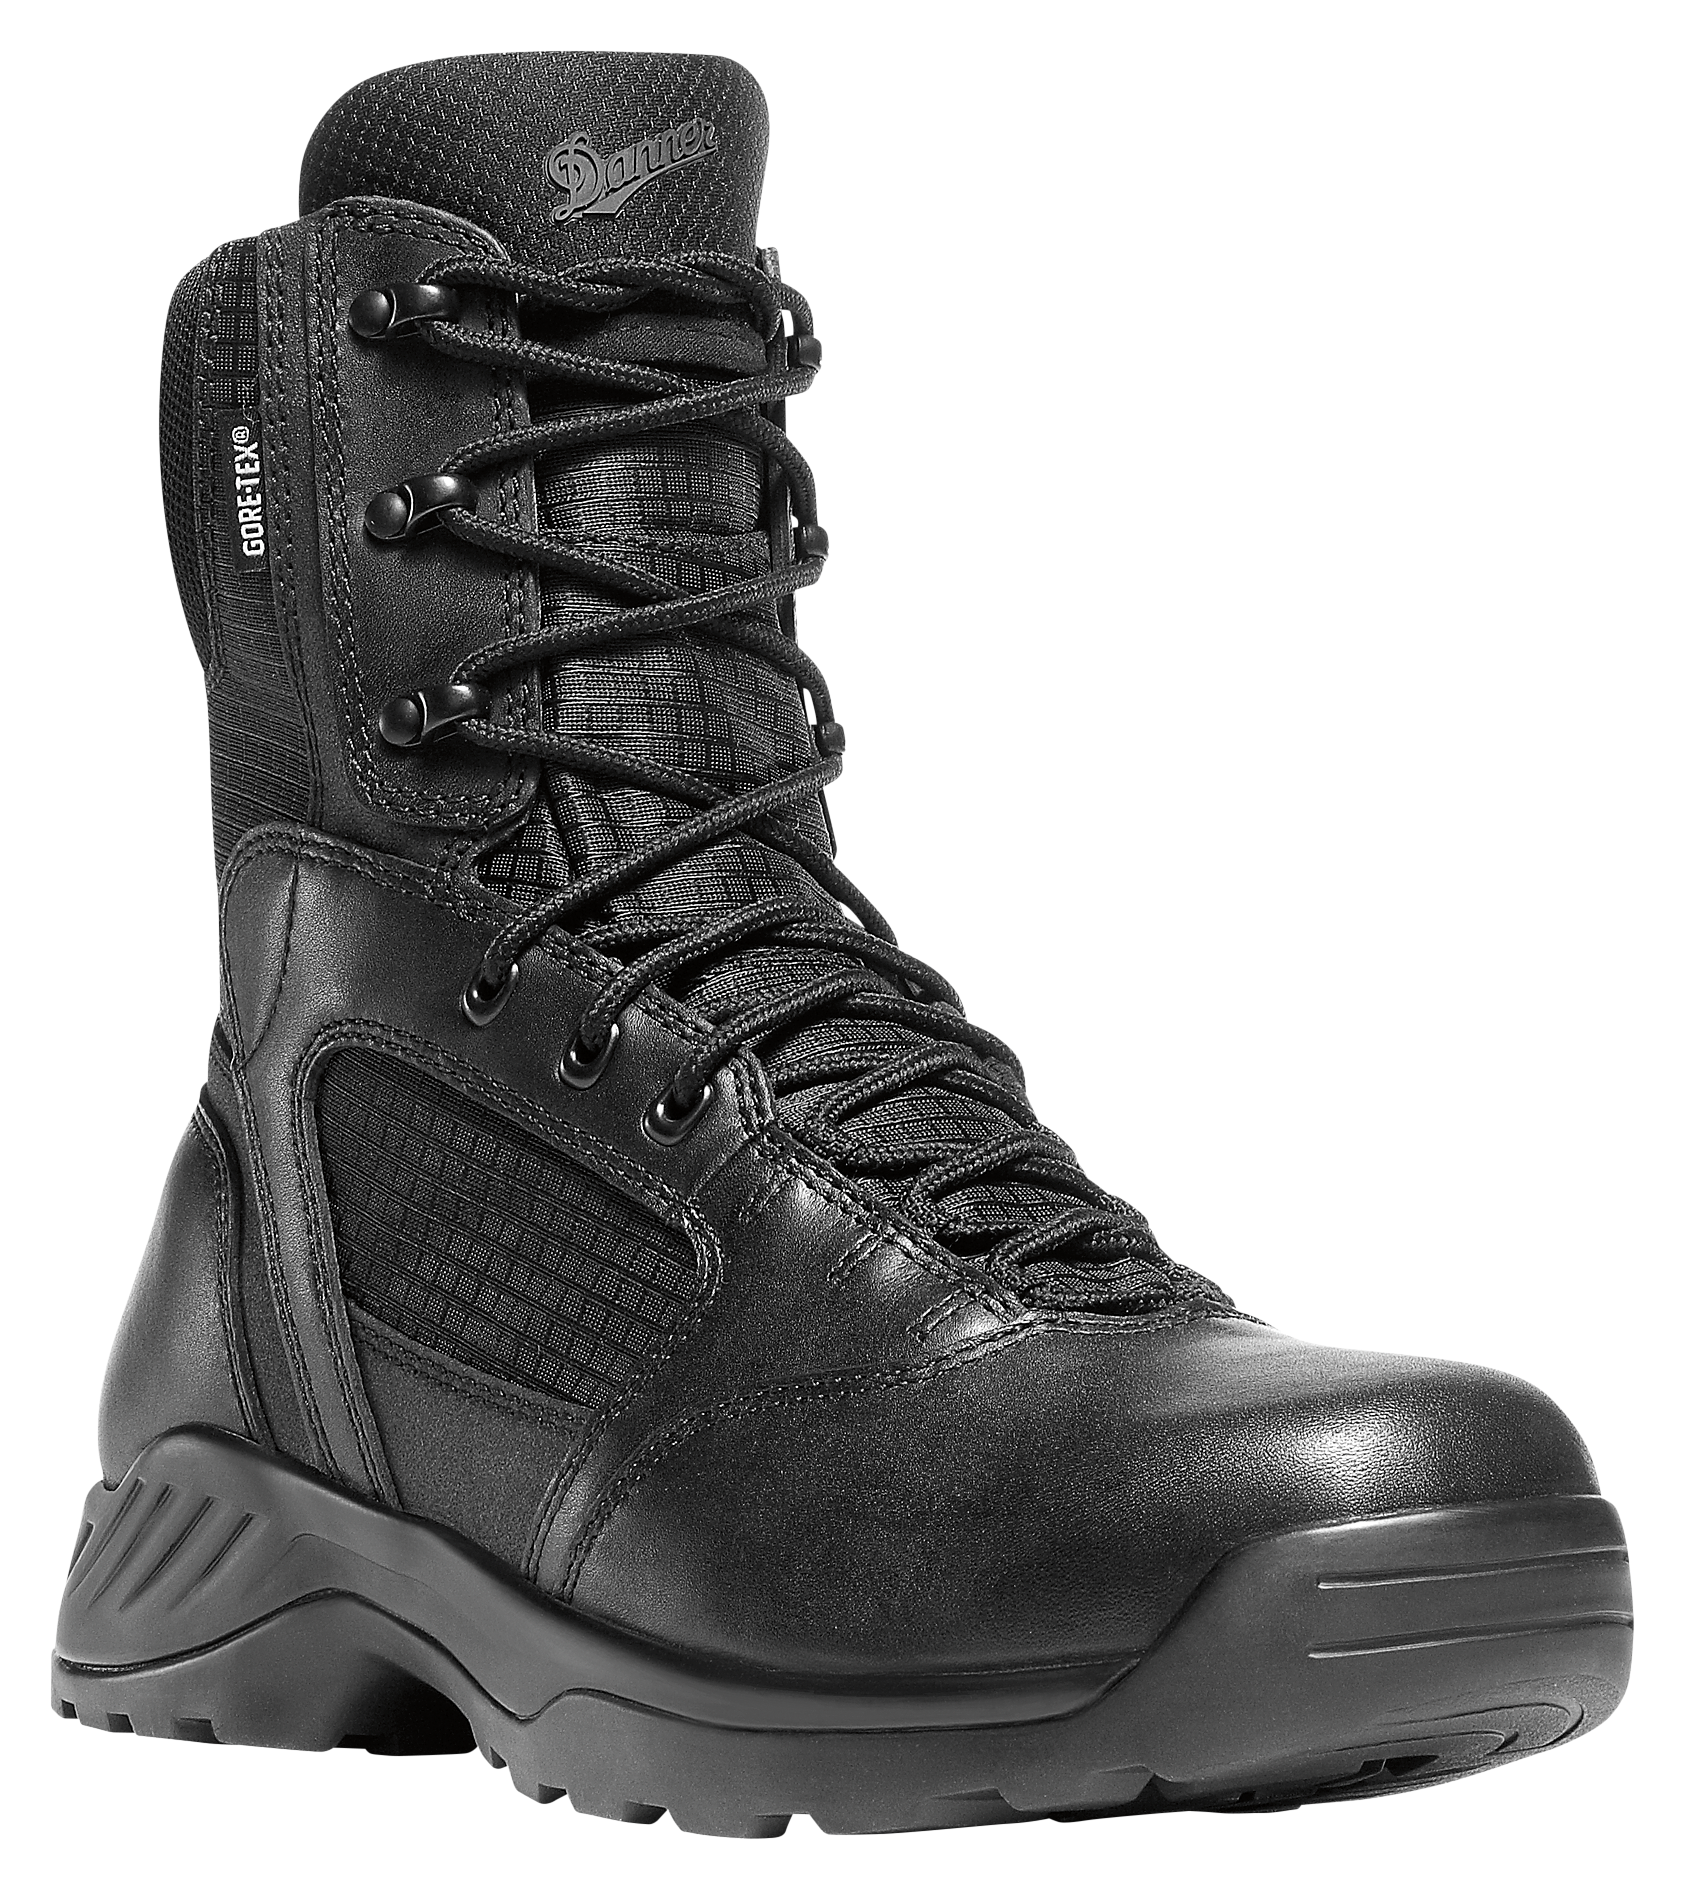 Danner Kinetic GTX Side-Zip Waterproof Tactical Duty Boots for Men - Black - 8.5M